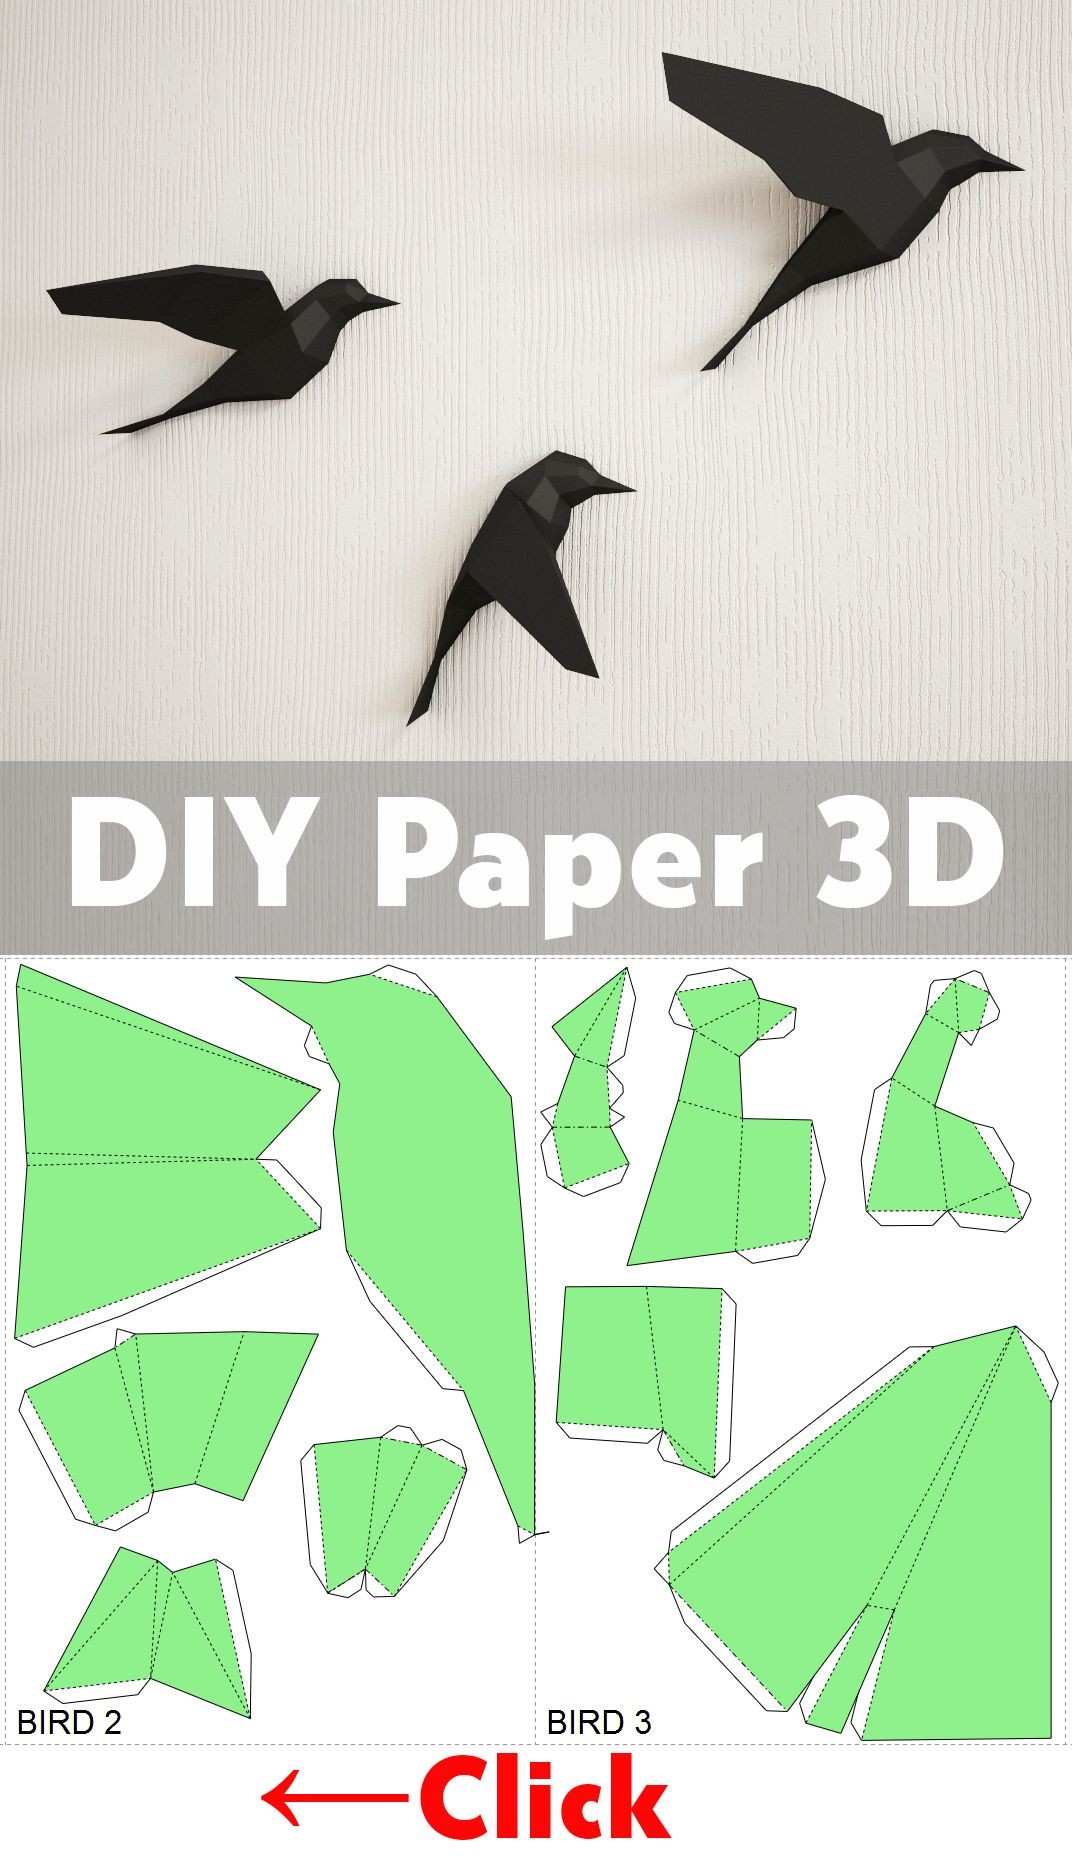 Papercraft Home Diy Paper Birds On Wall 3d Papercraft Easy Paper Model Sculpture